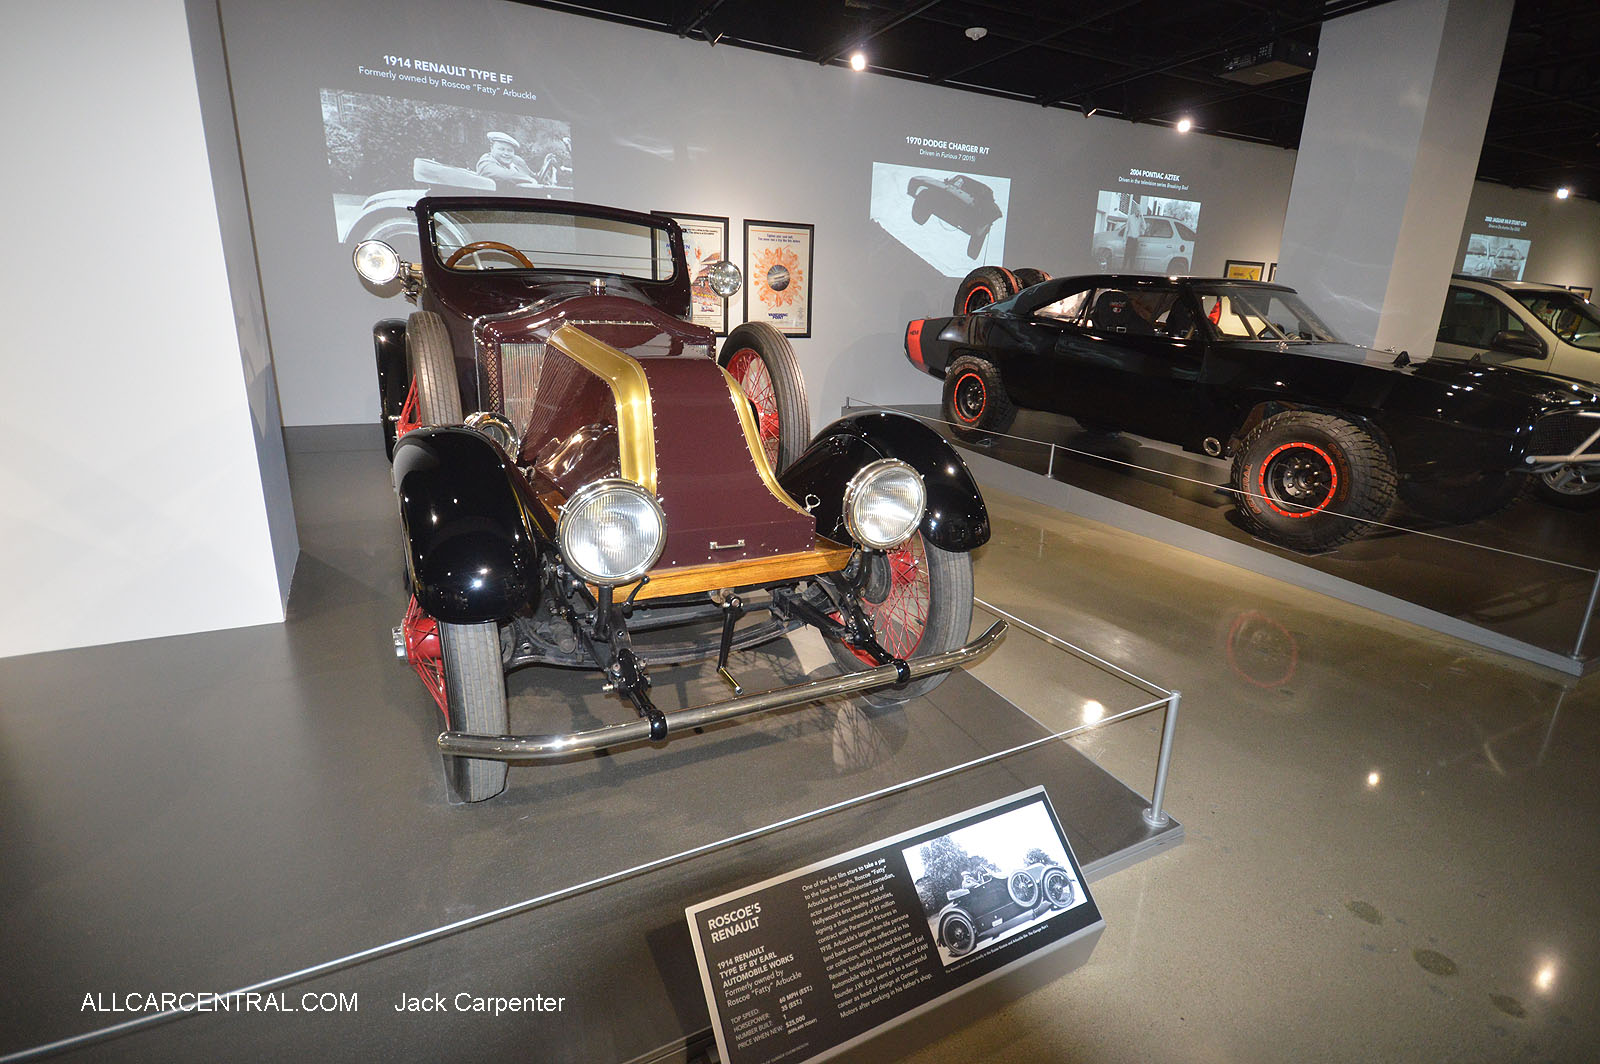   Renault Type EF 1914 Earl Automobile 
Works  Petersen Automotive Museum 2016